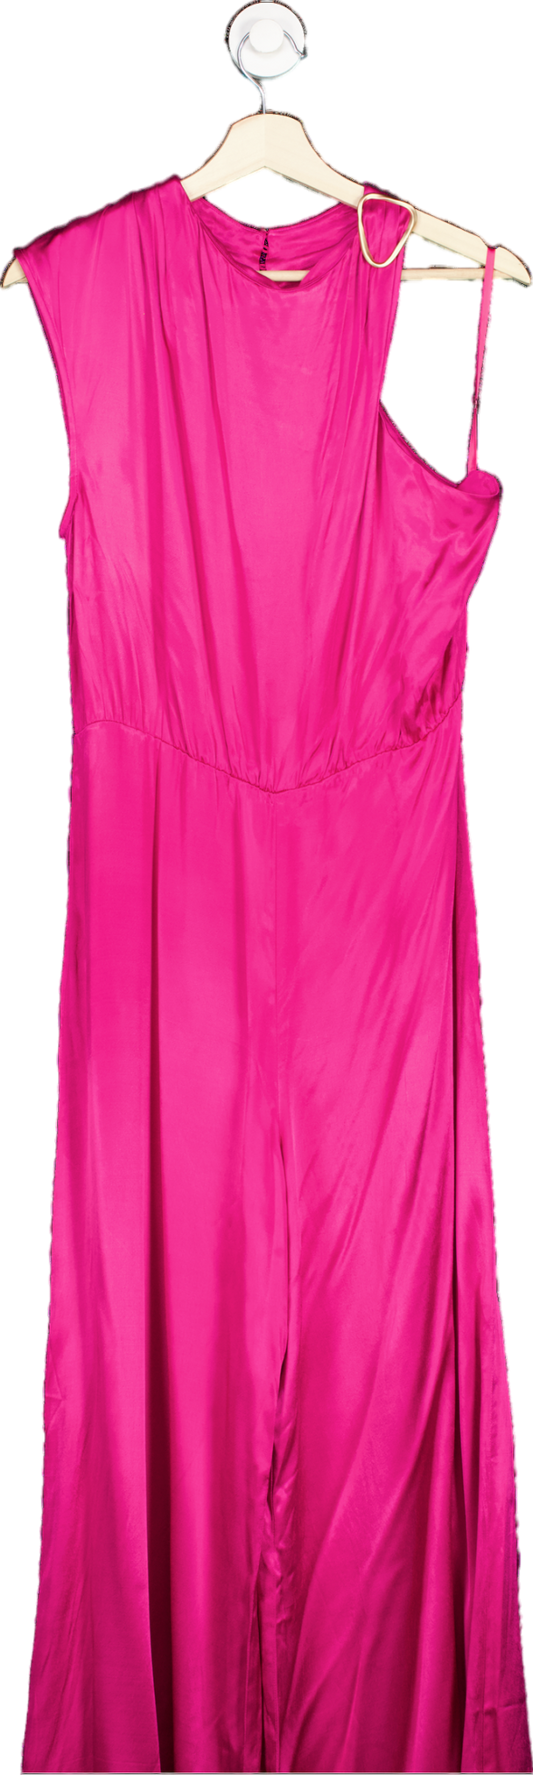 Anthropologie Corey Lynn Calter Pink One-Shoulder Dress M